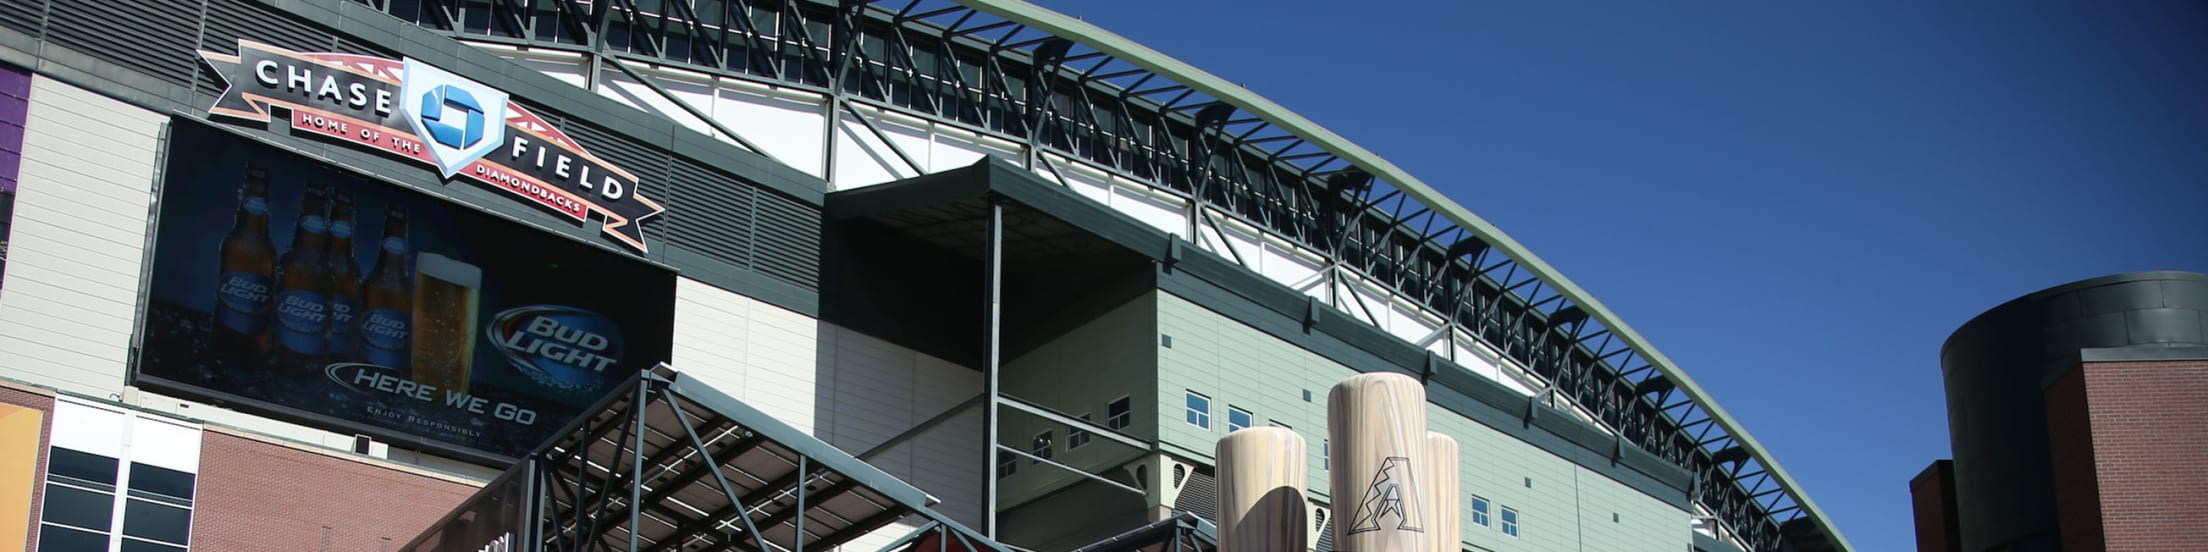 Chase Field, Arizona Diamondbacks ballpark - Ballparks of Baseball